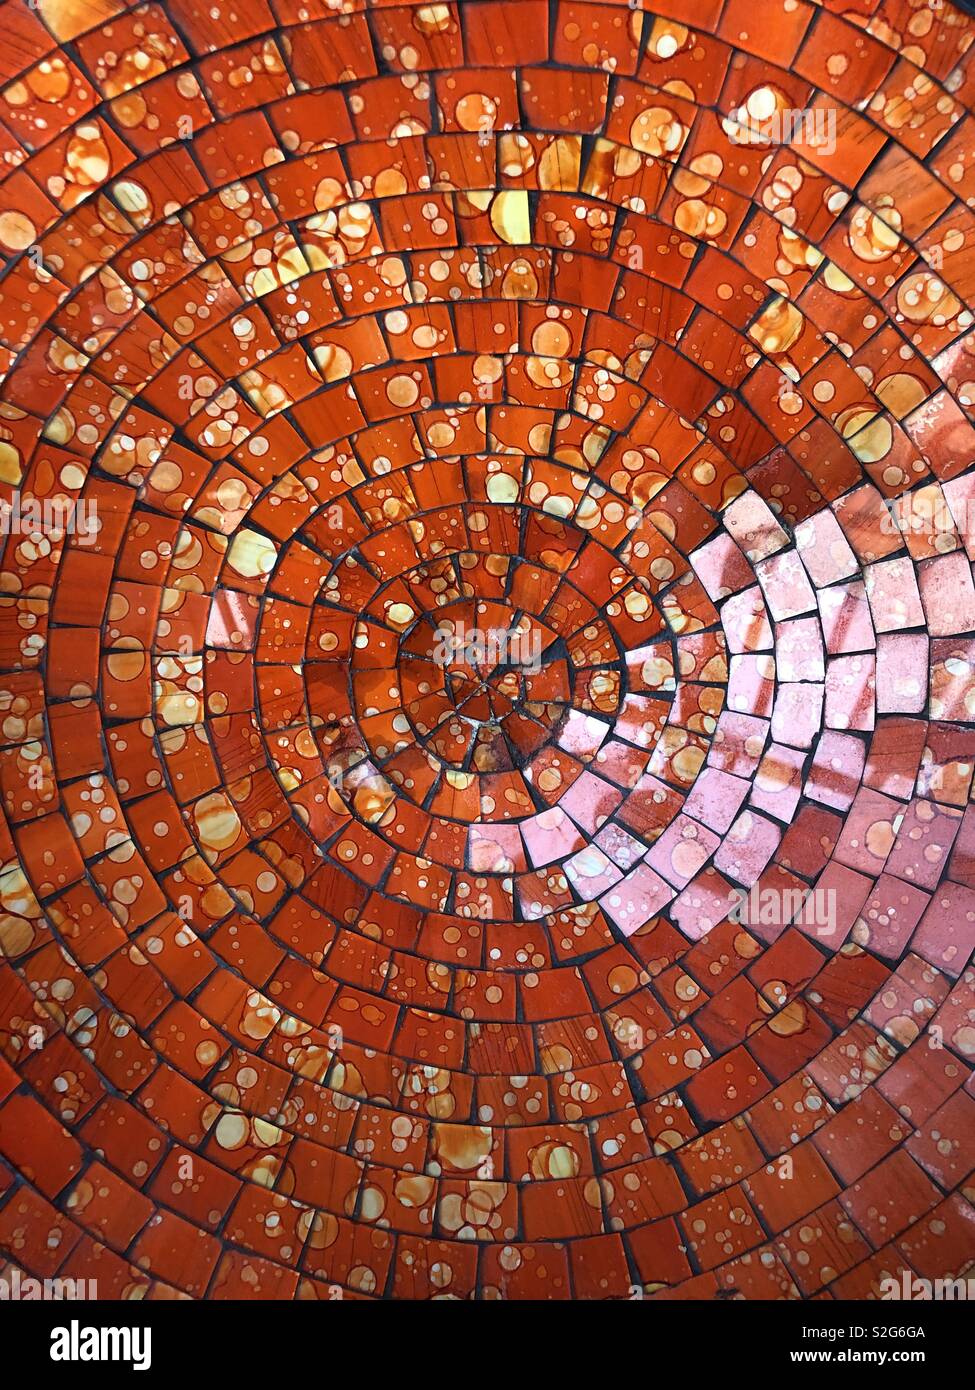 Orange mosaics in circles Stock Photo